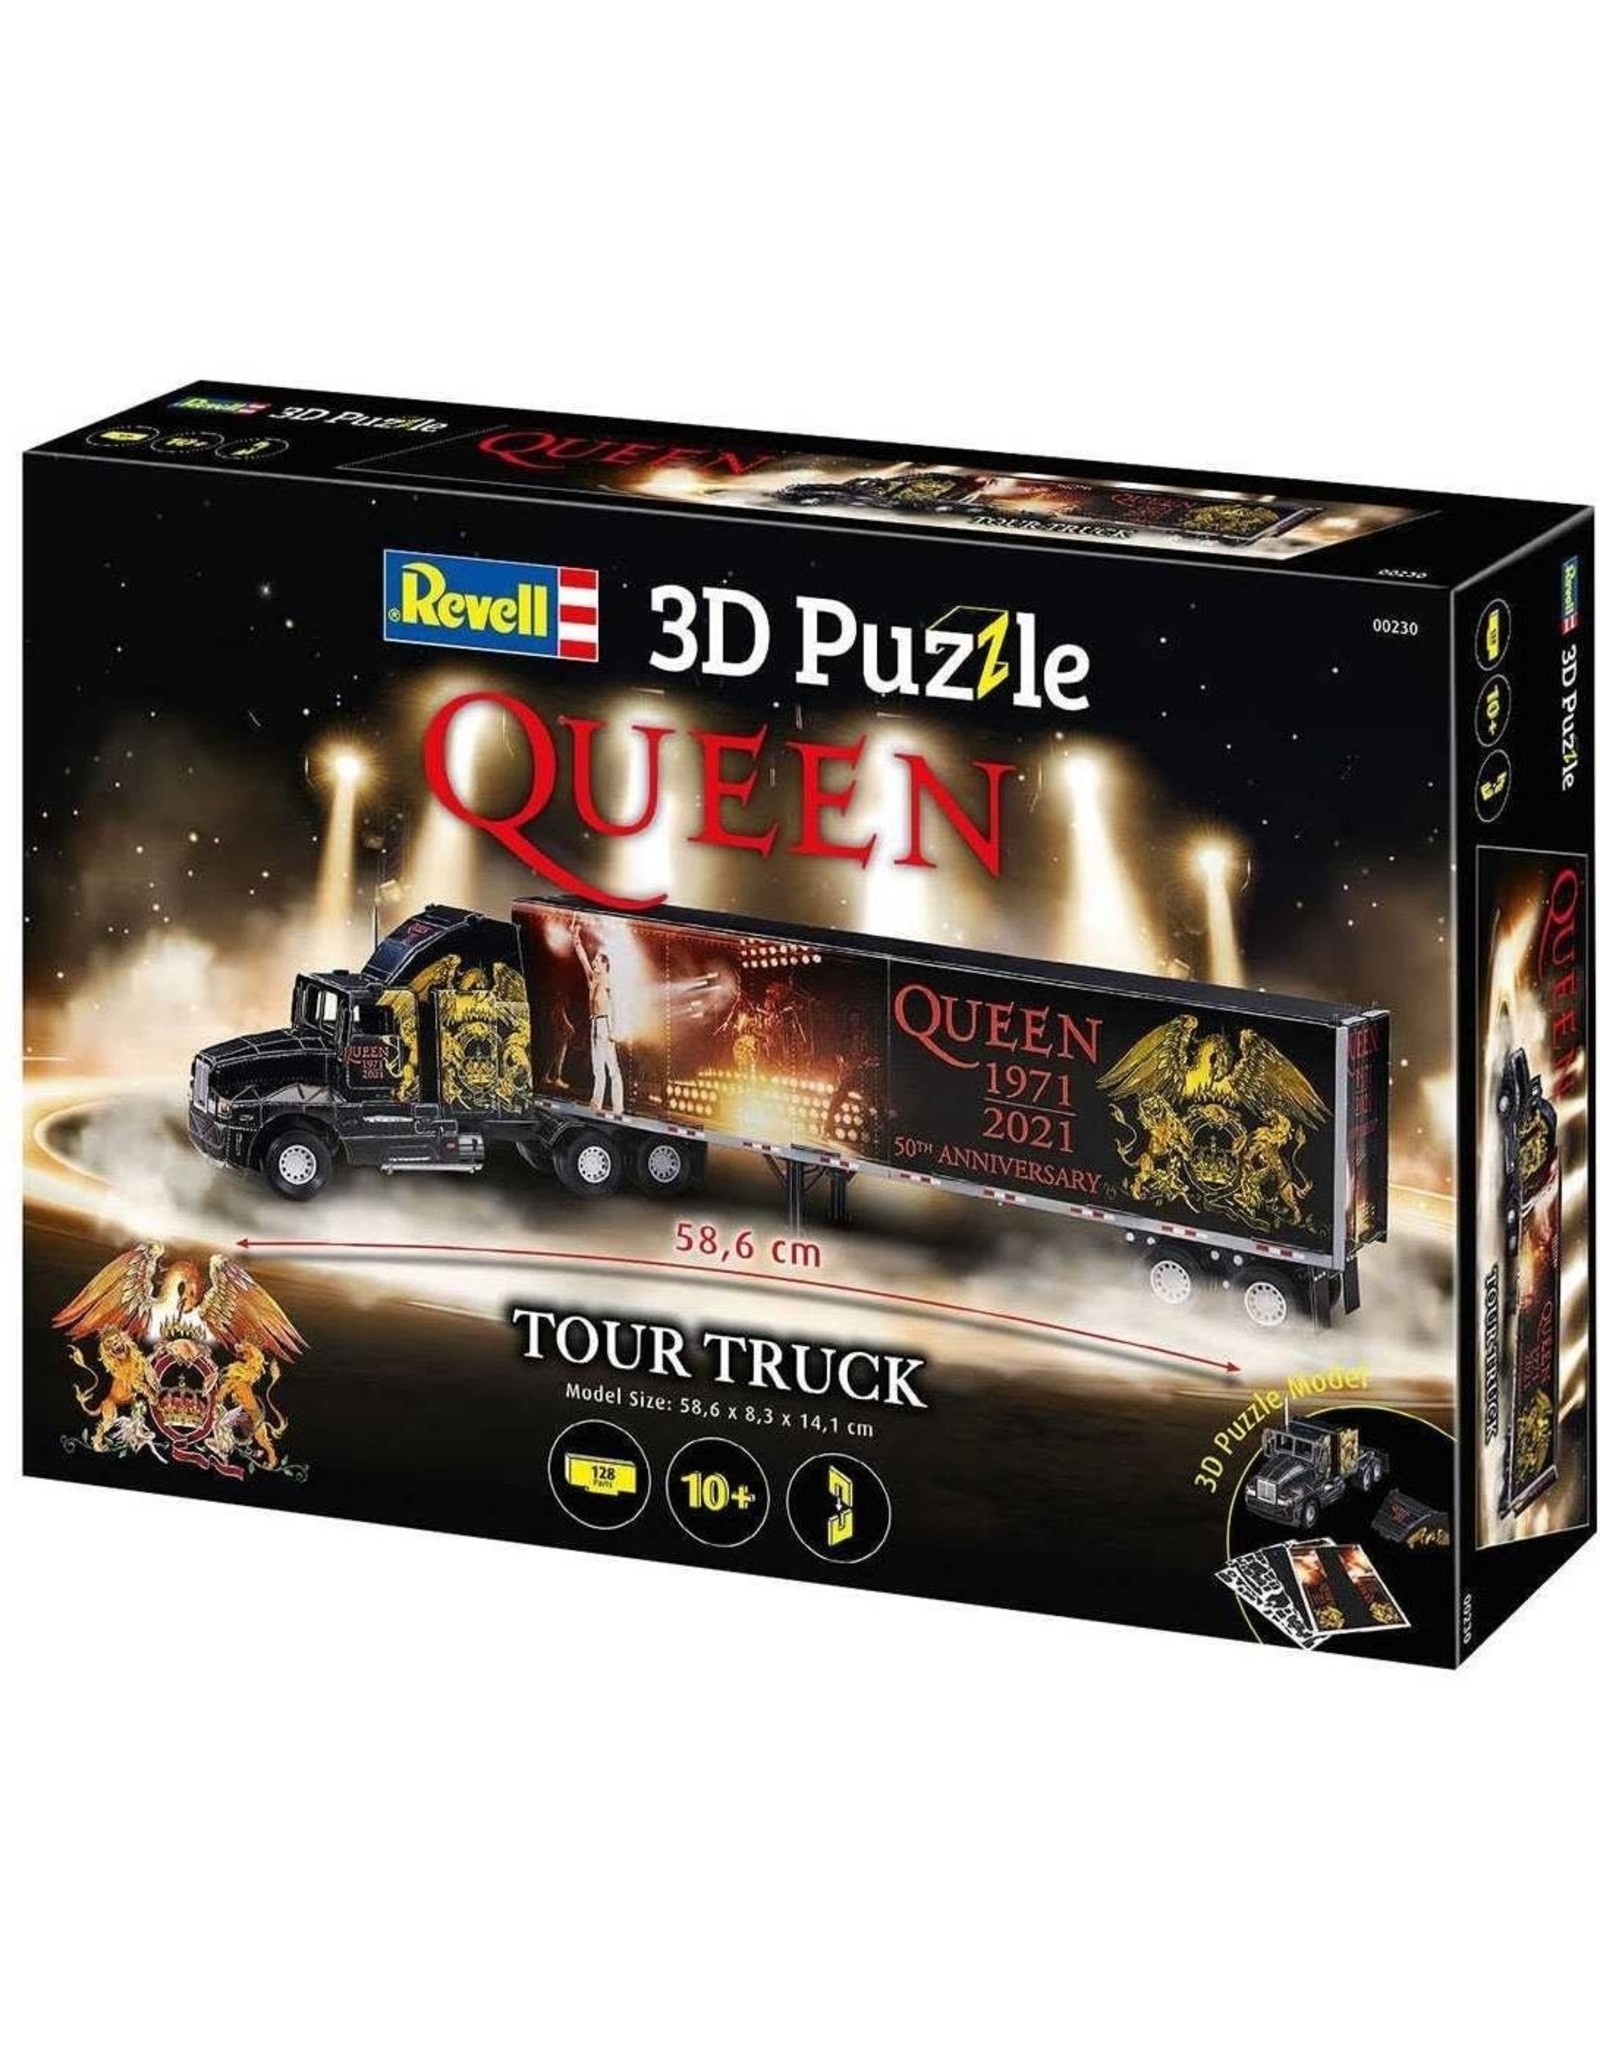 Revell 3D Puzzle Model Queen Tour Truck